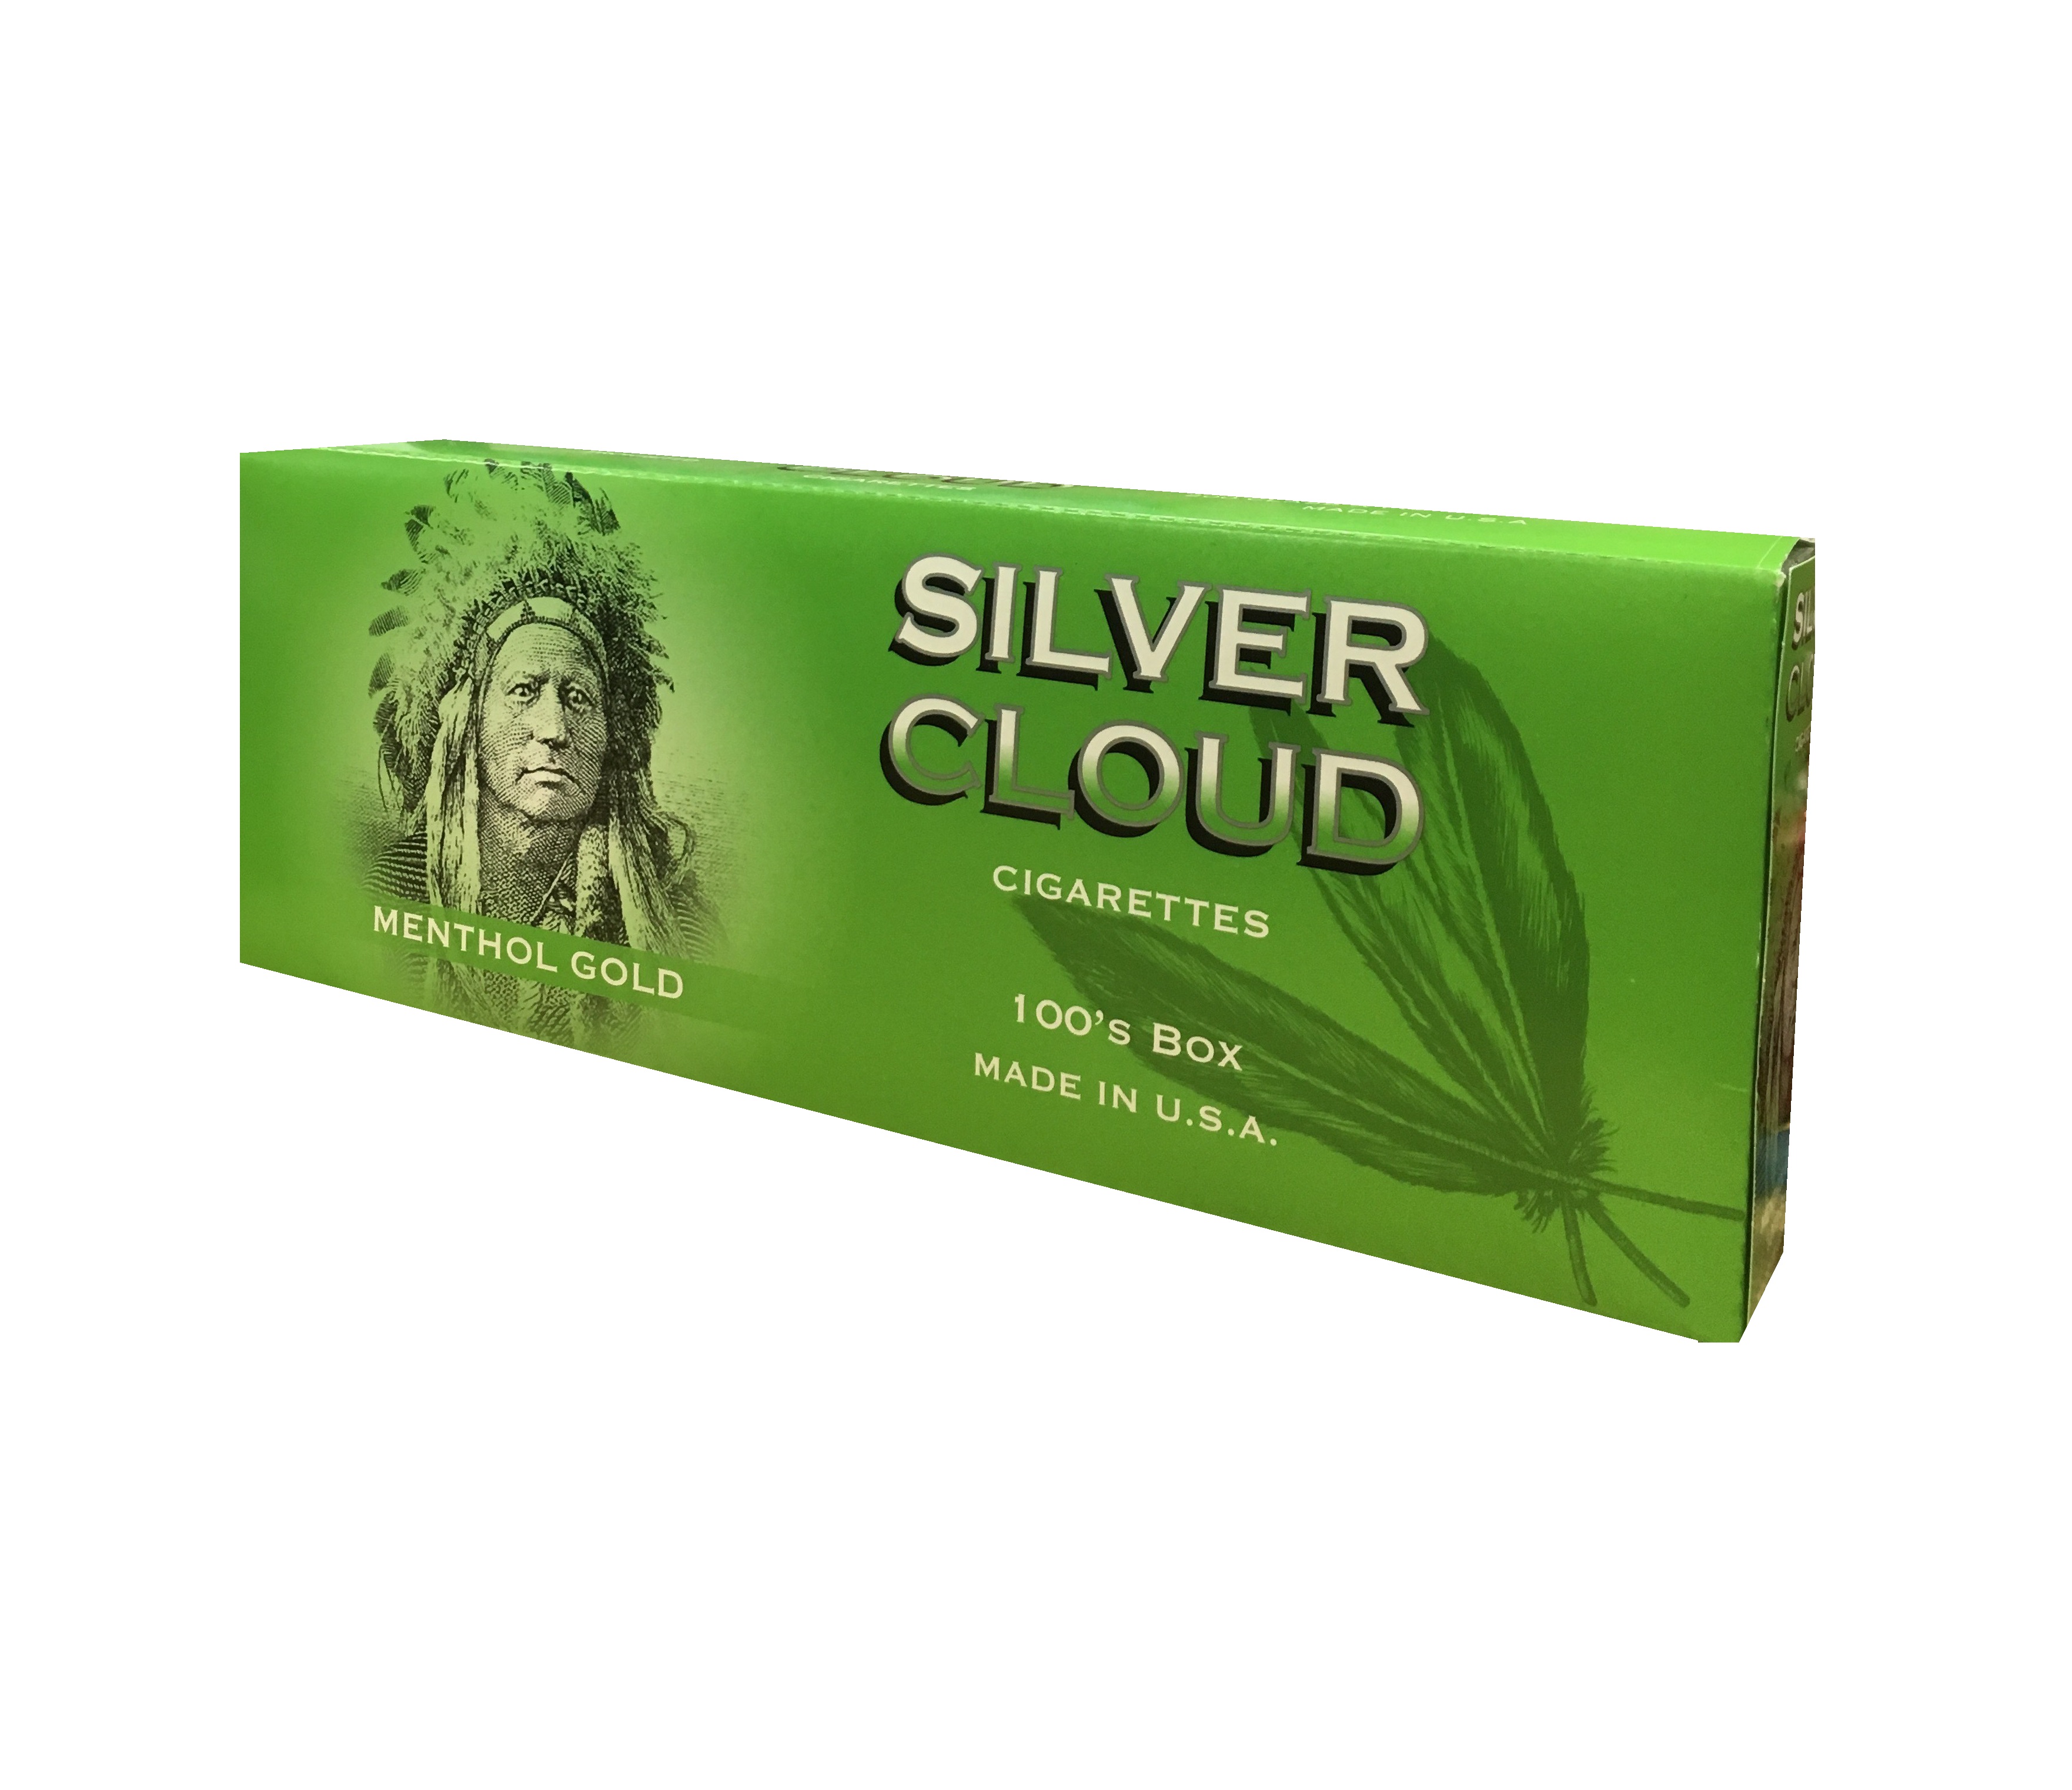 Silver cloud menthol gold 100 box